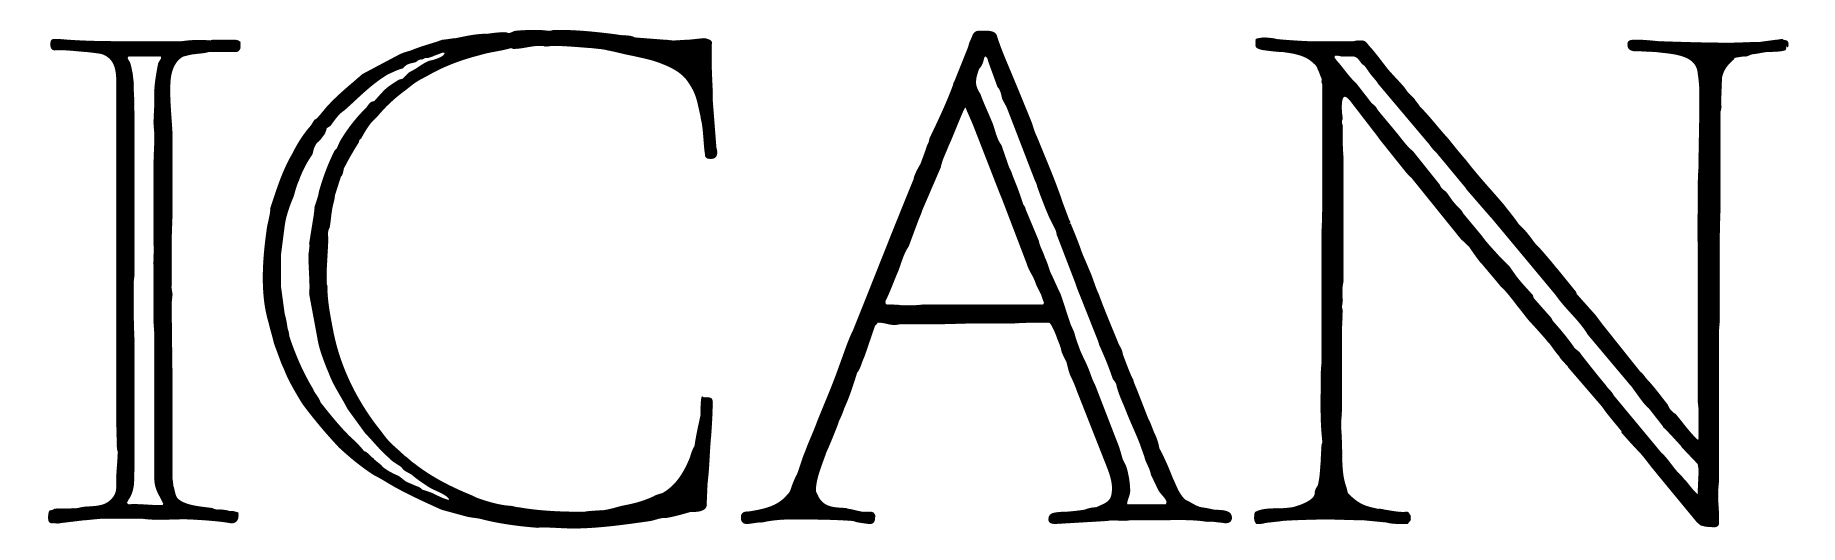 Quadra ICAN logo